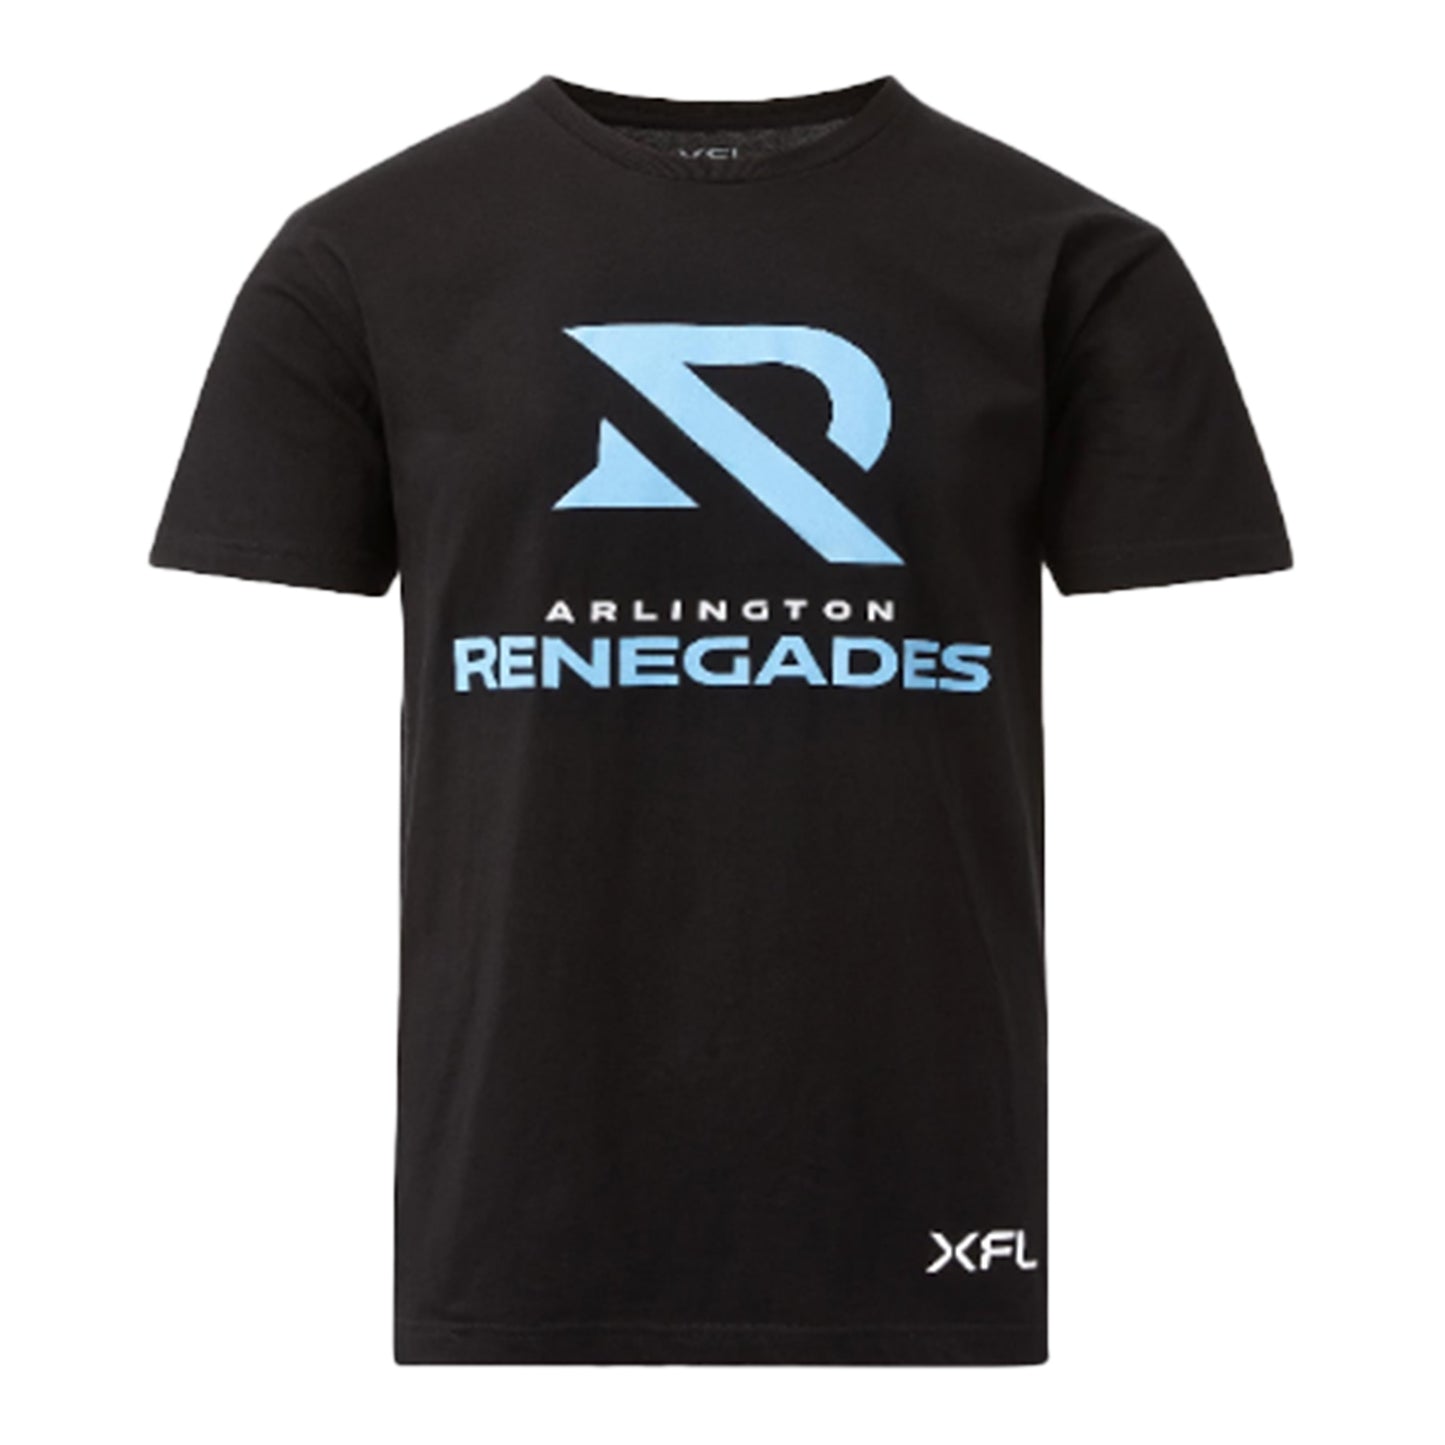 Arlington Renegades T-Shirt In Black - Front View